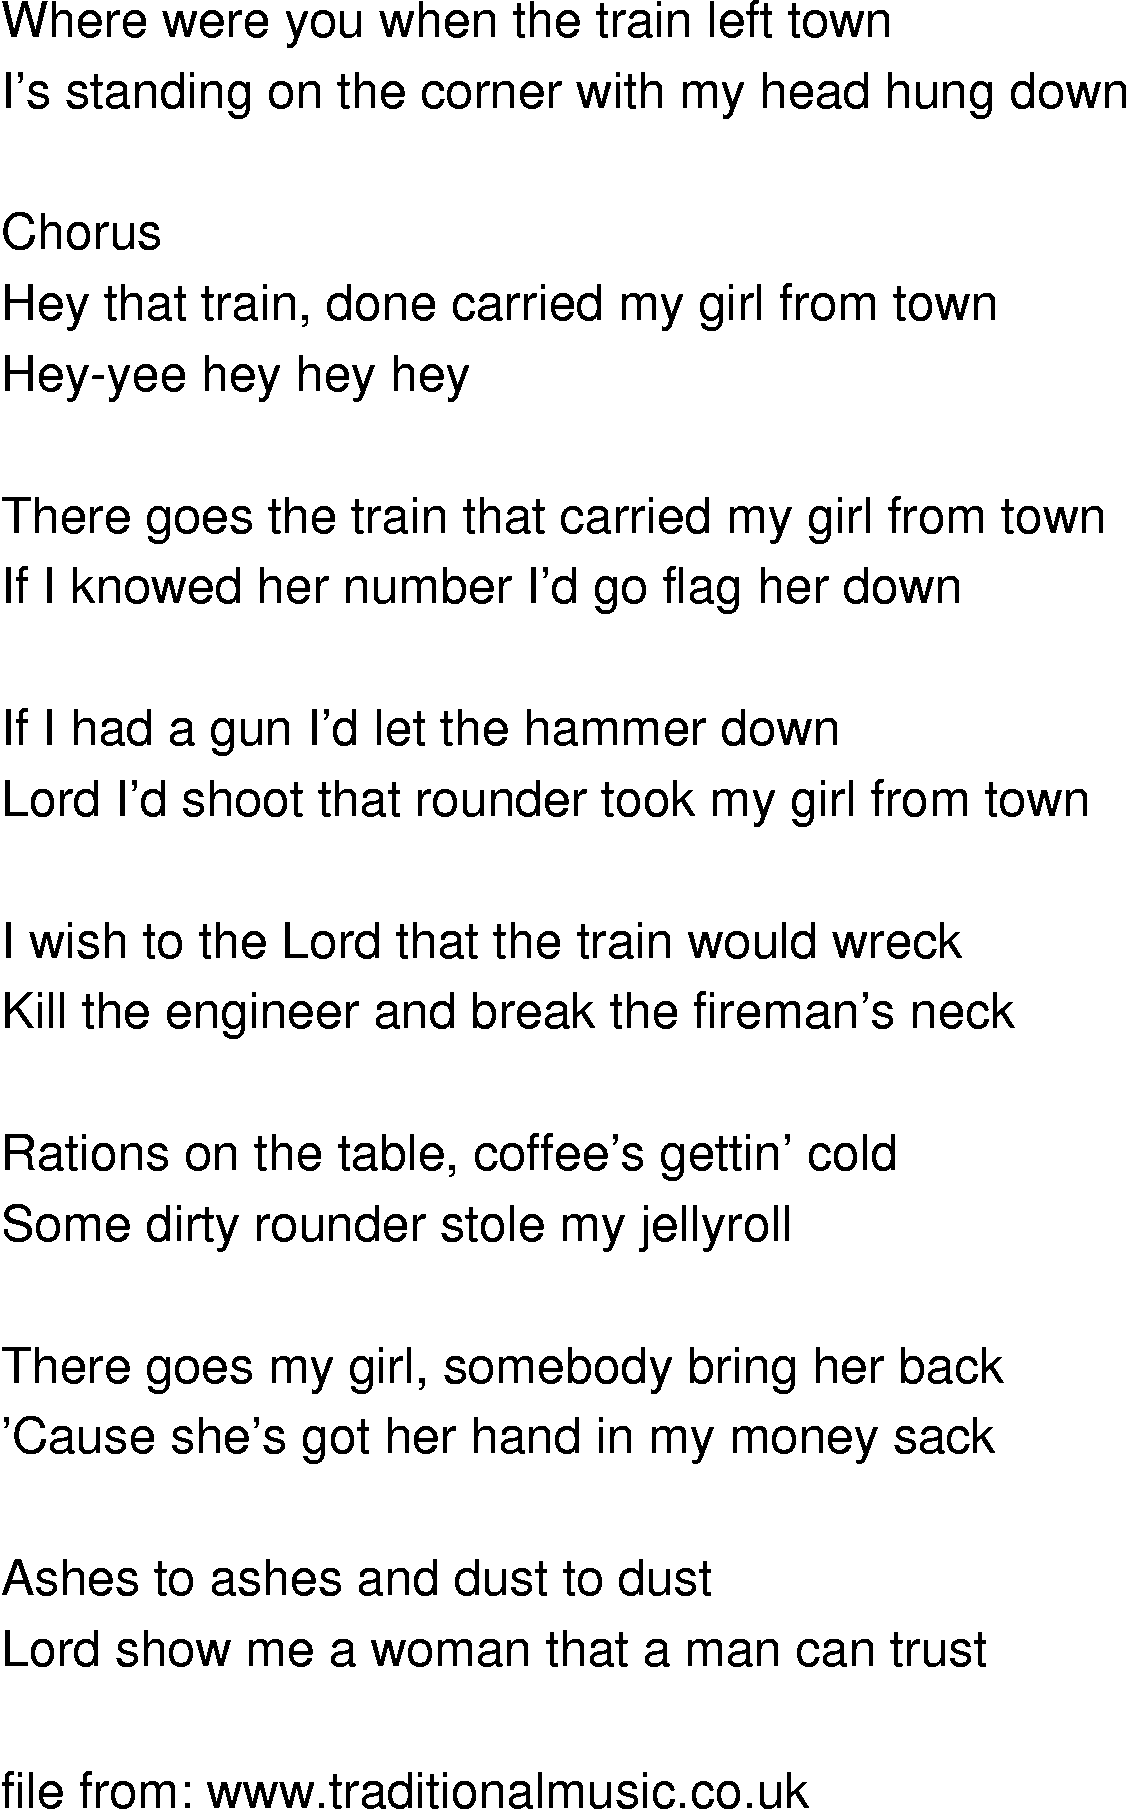 My girl song with lyrics